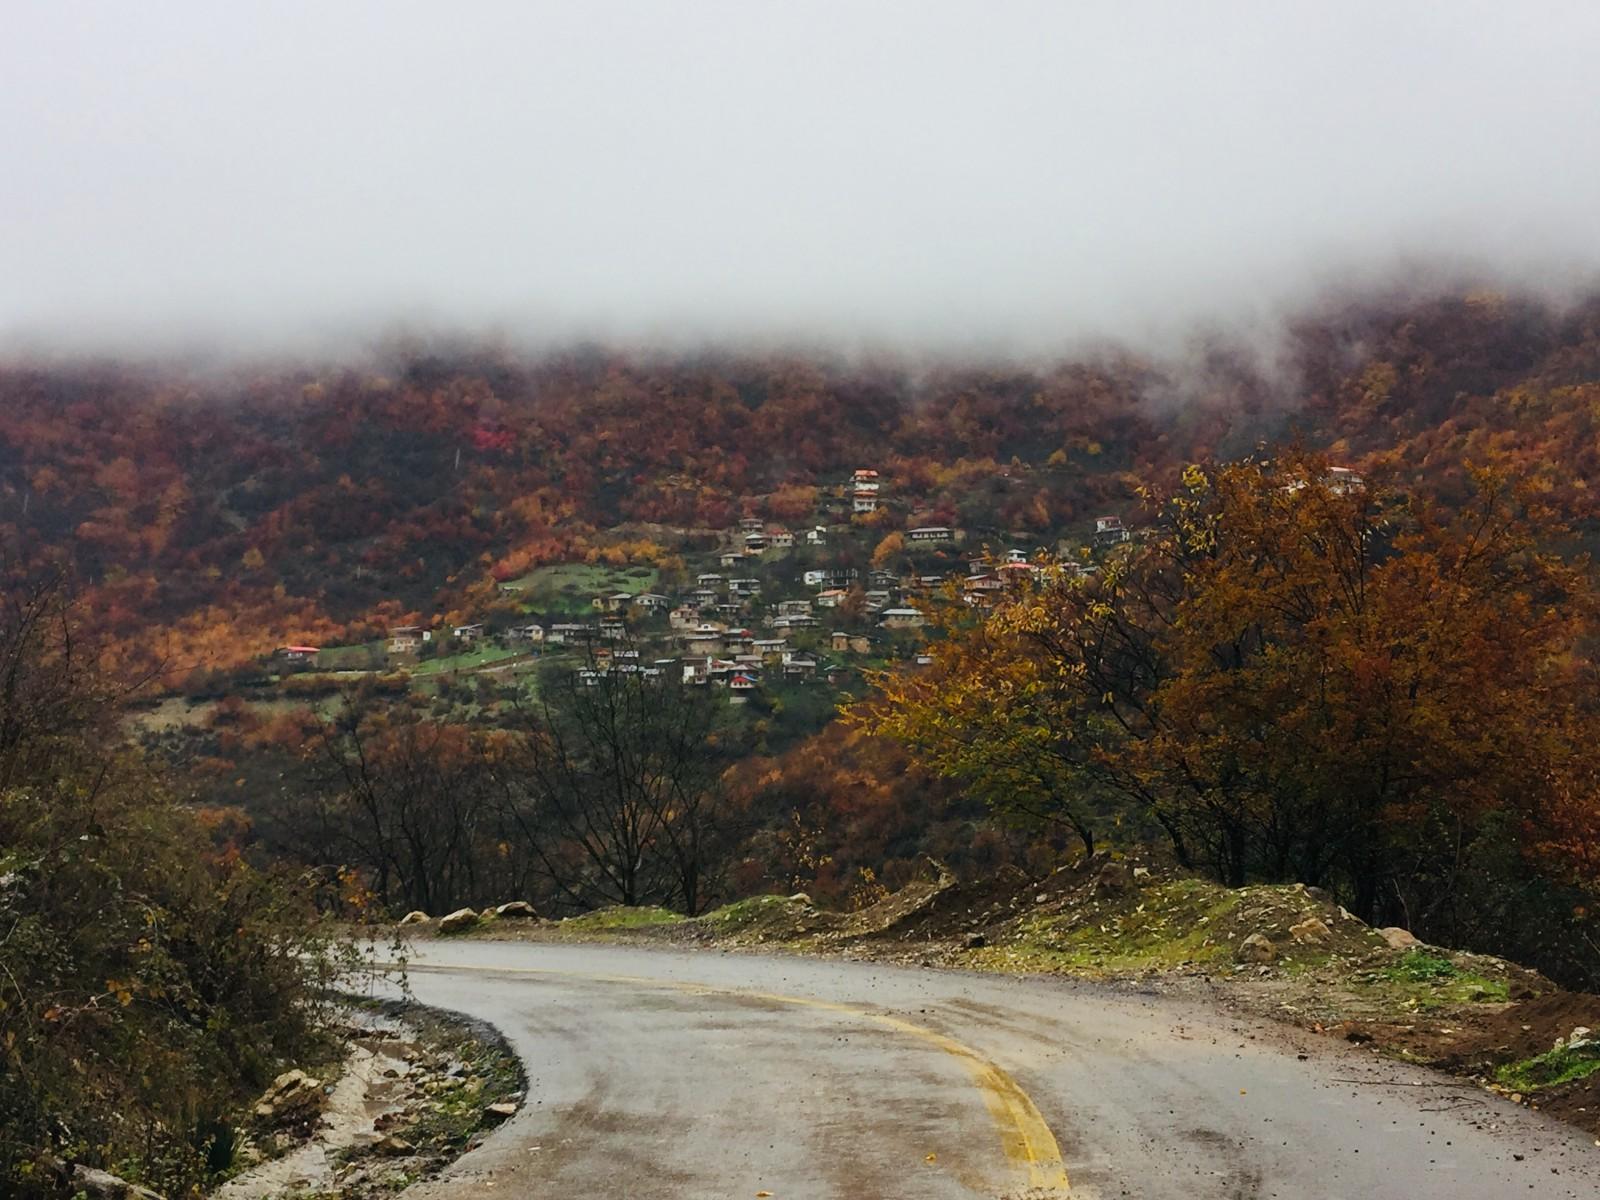 ویلا علی آباد کوهستانی-جنگلی 